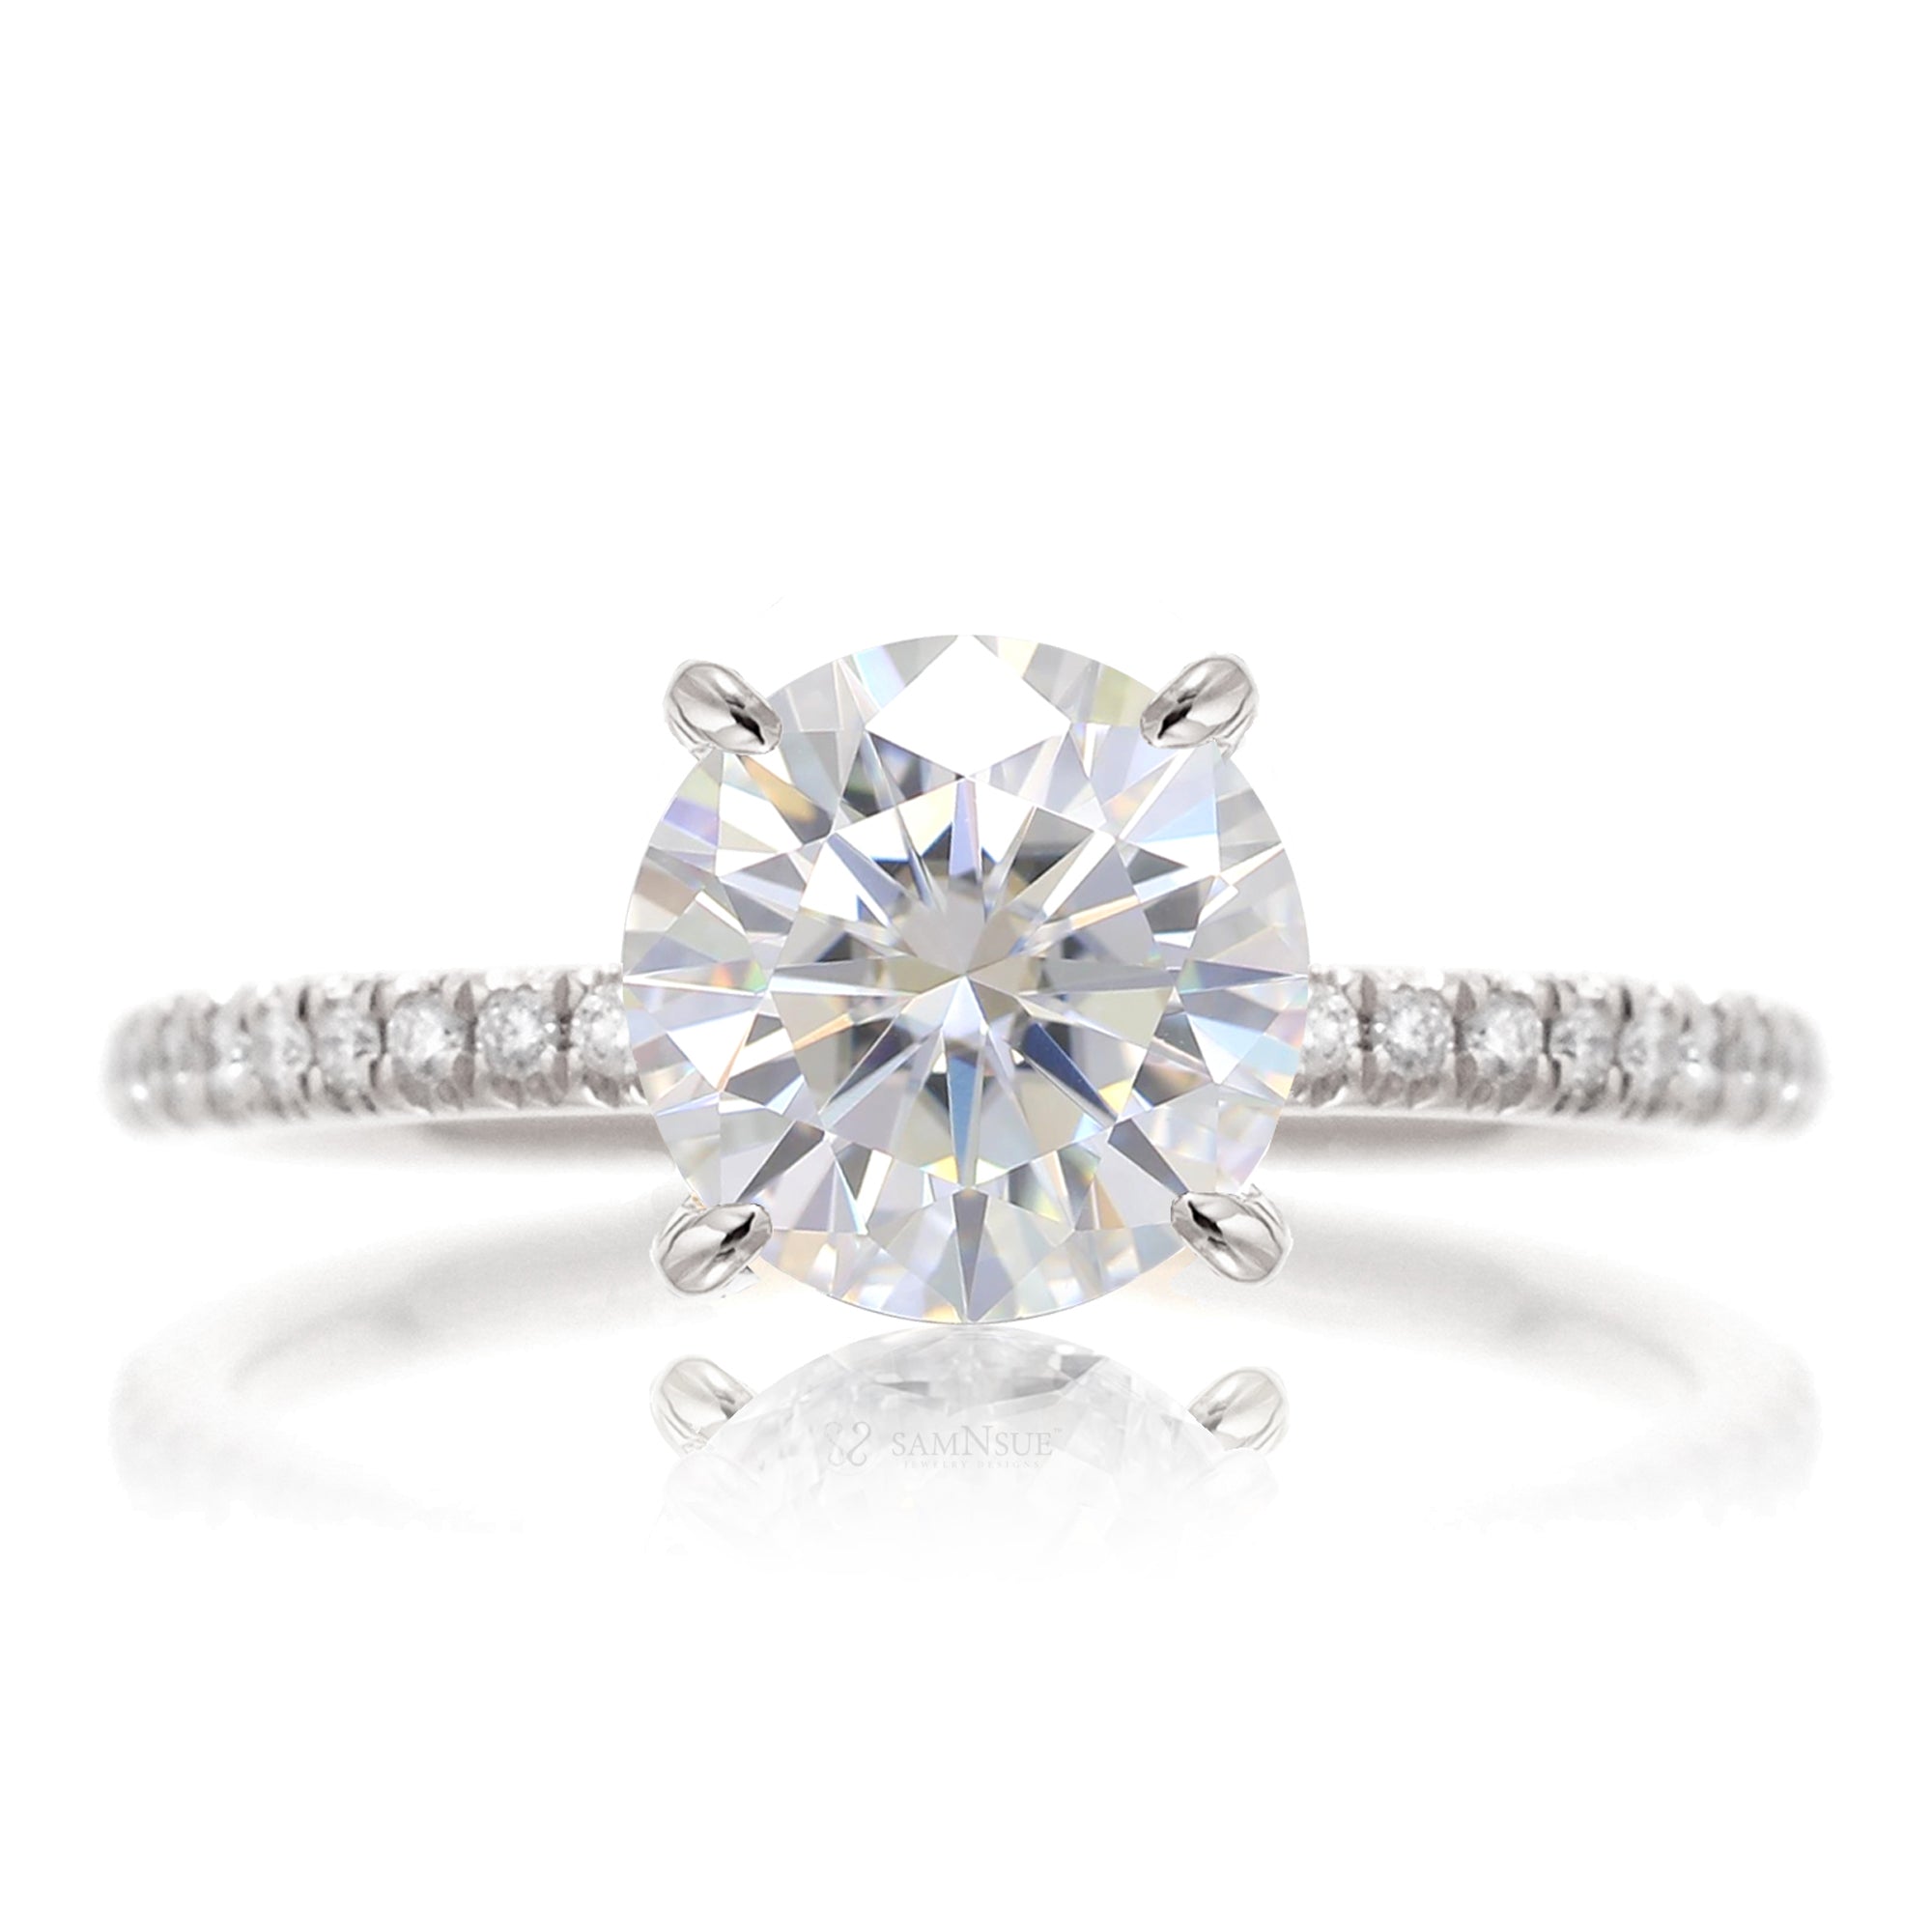 Round brilliant cut moissanite diamond band engagement ring white gold - The Ava